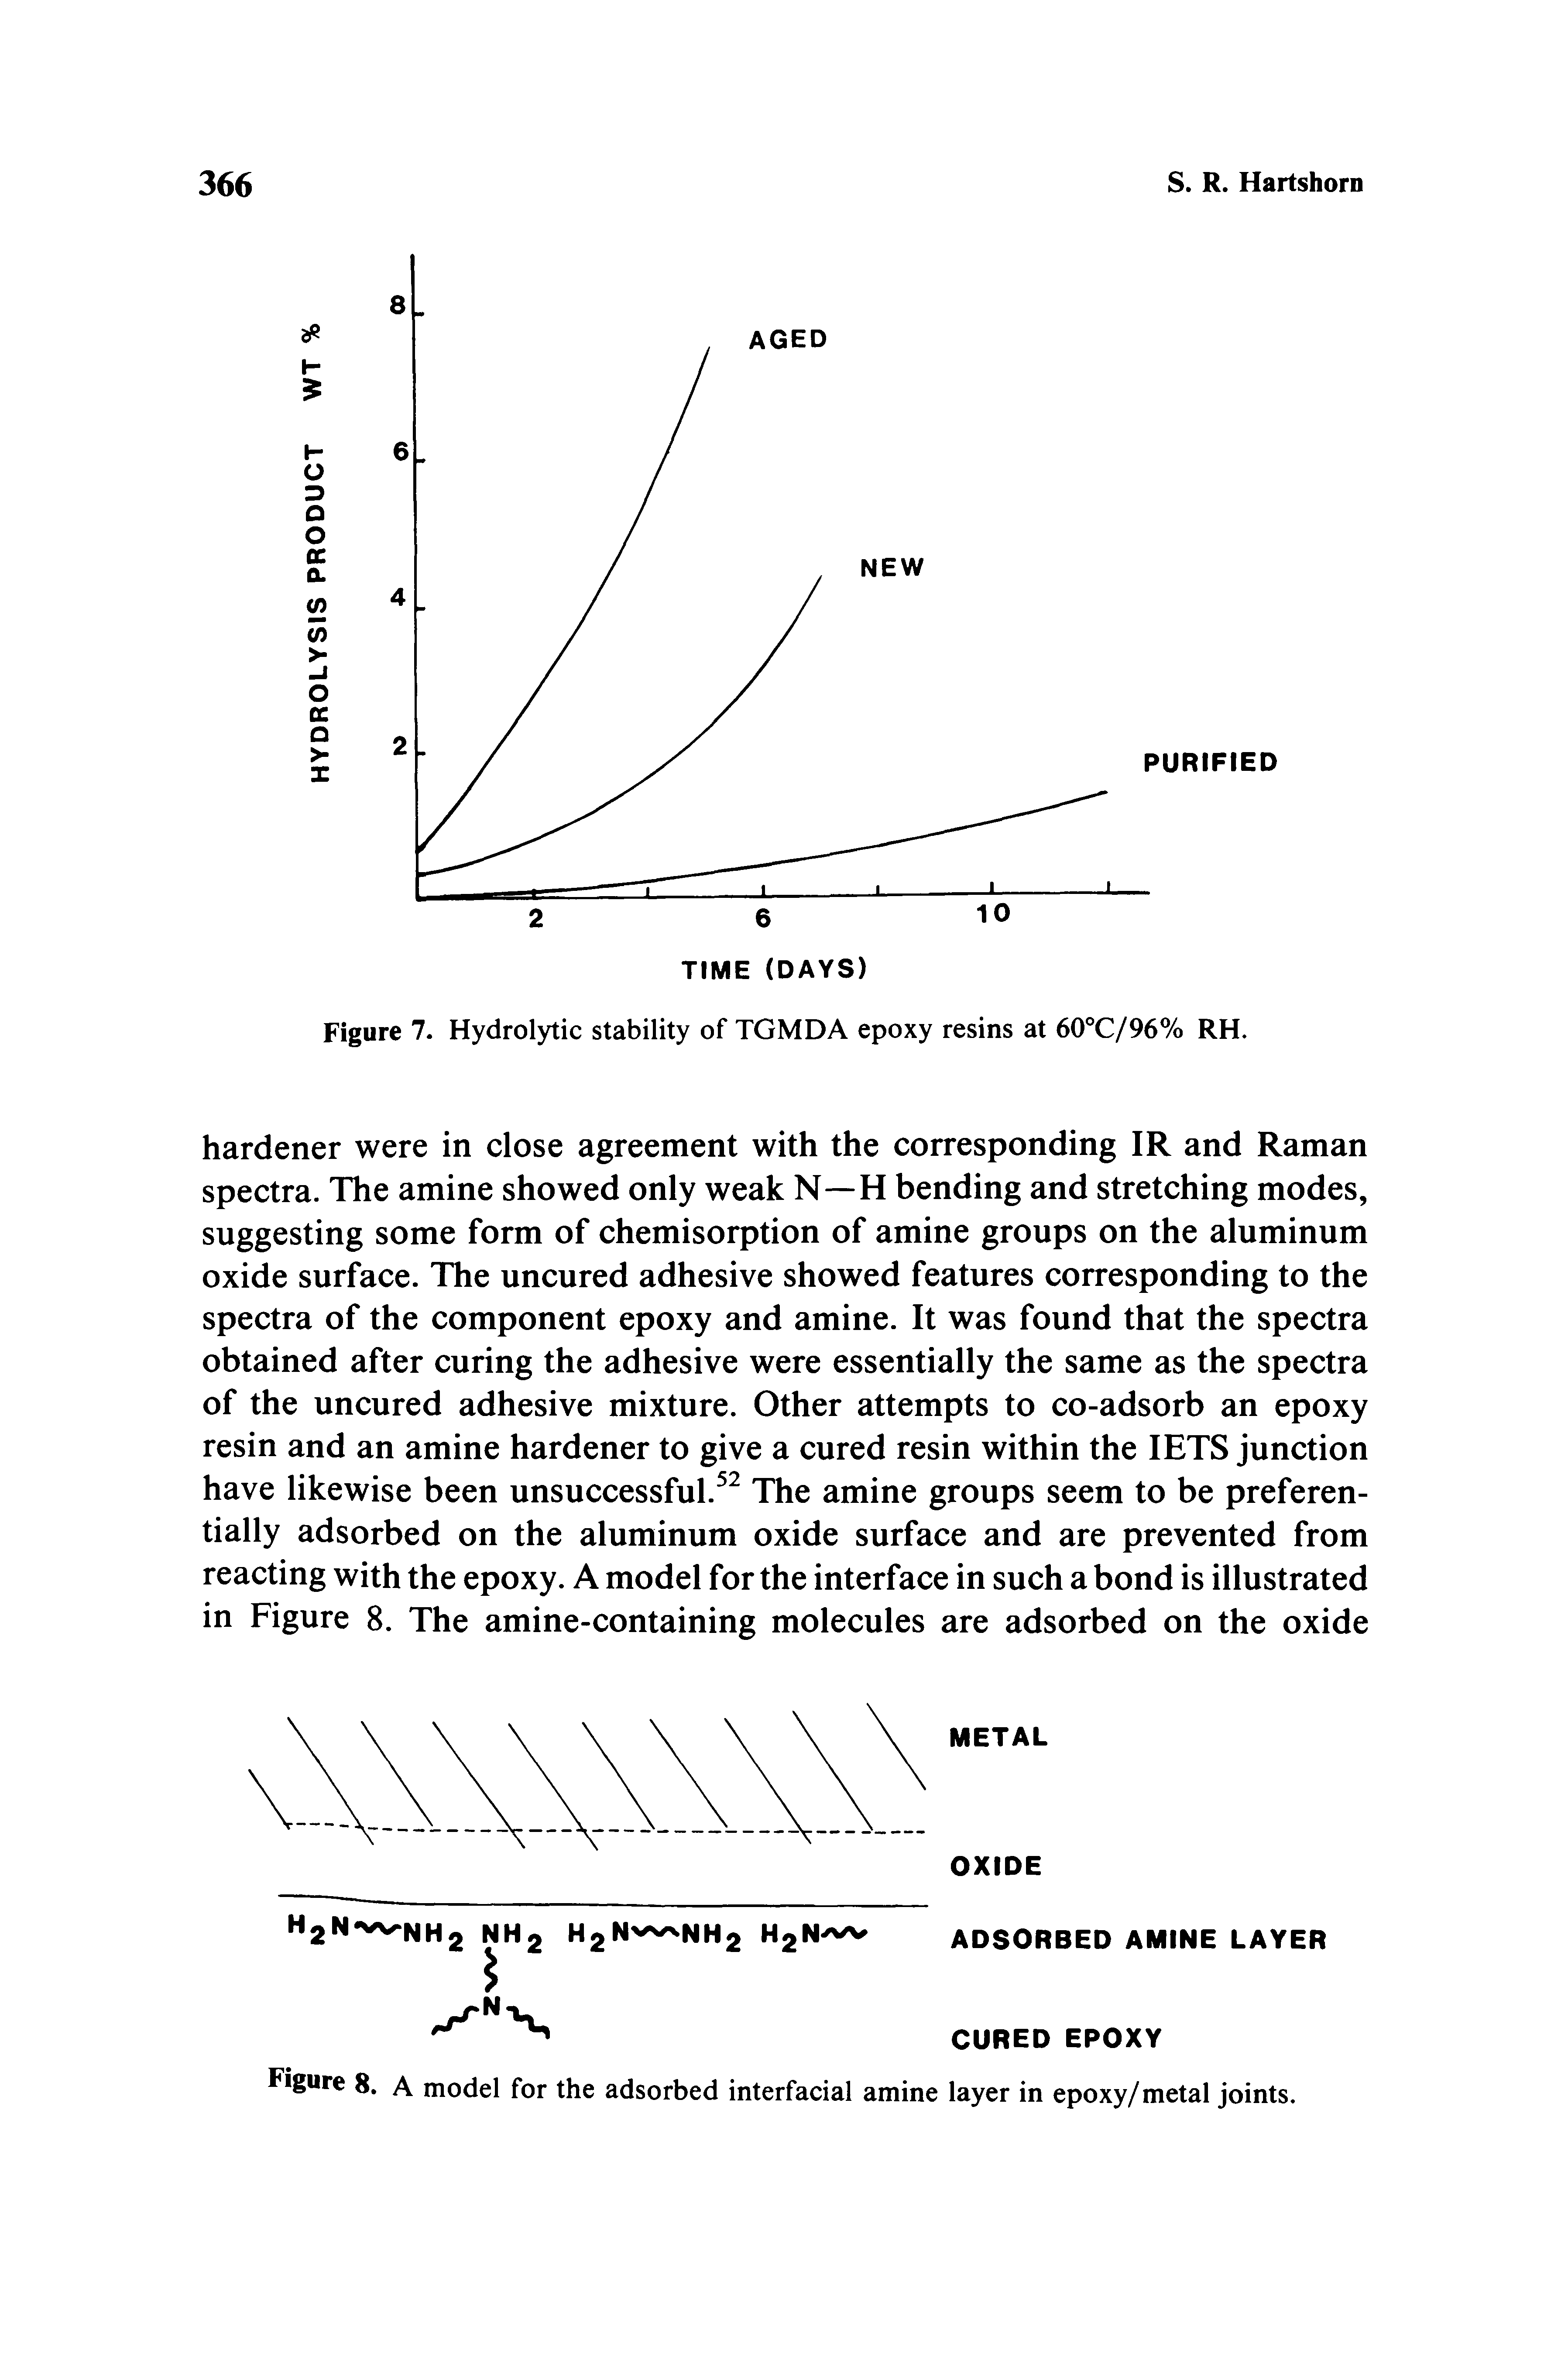 Figure 7. Hydrolytic stability of TGMDA epoxy resins at 60°C/96% RH.